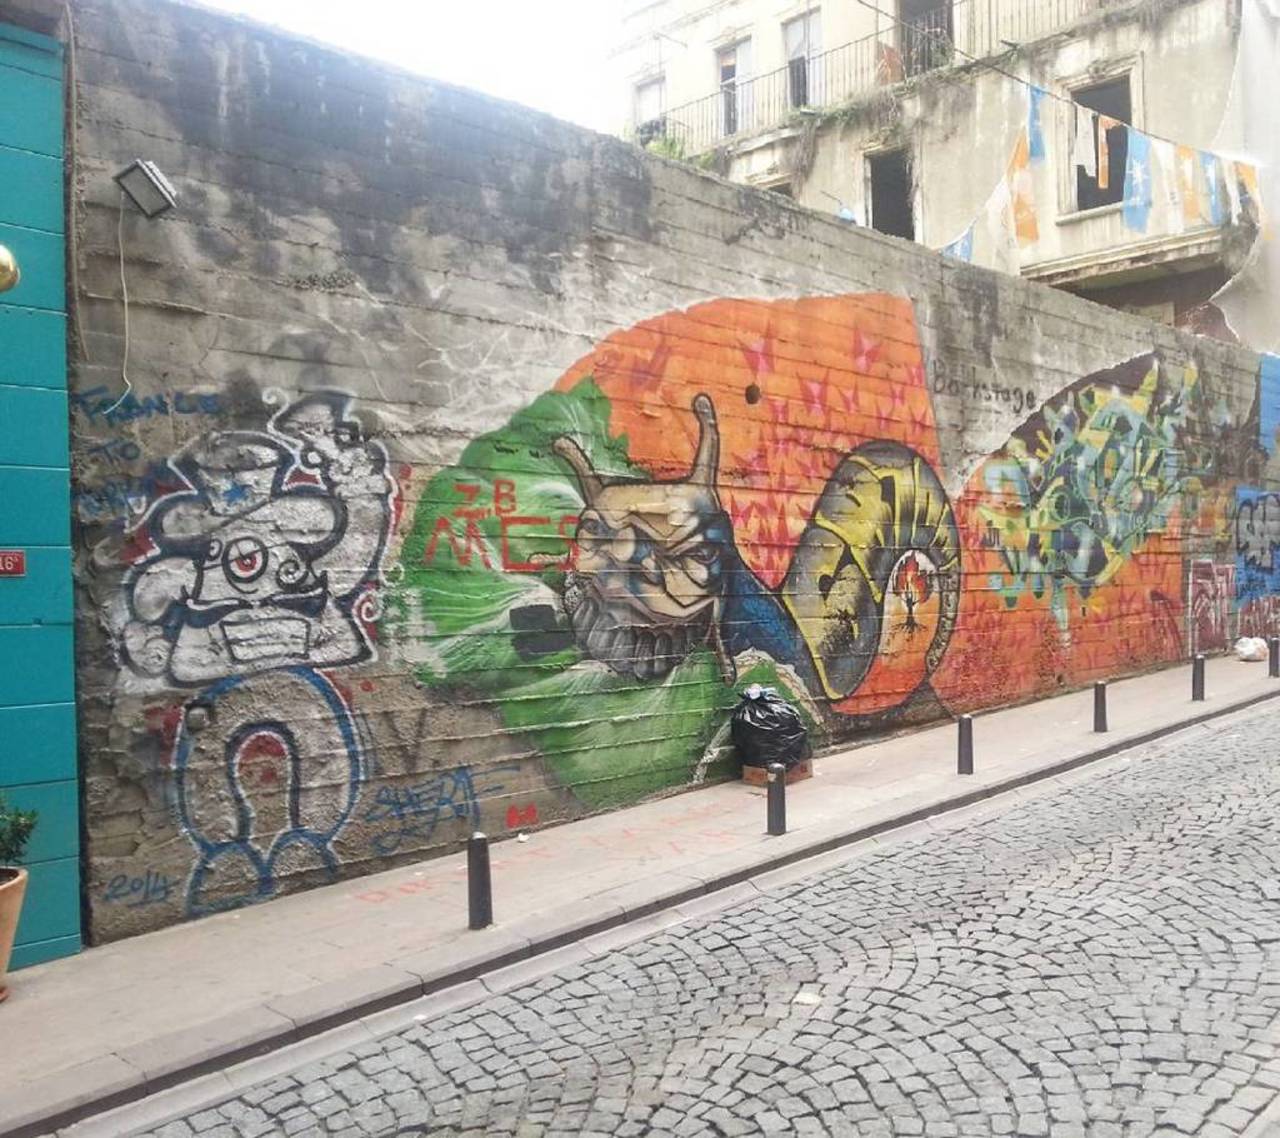 #streetart #graffiti #publicart #urbanart #sokaksanatı #streetartistanbul #istanbulstreetart #graffitiart by wallen… http://t.co/GWzhJfxGWc